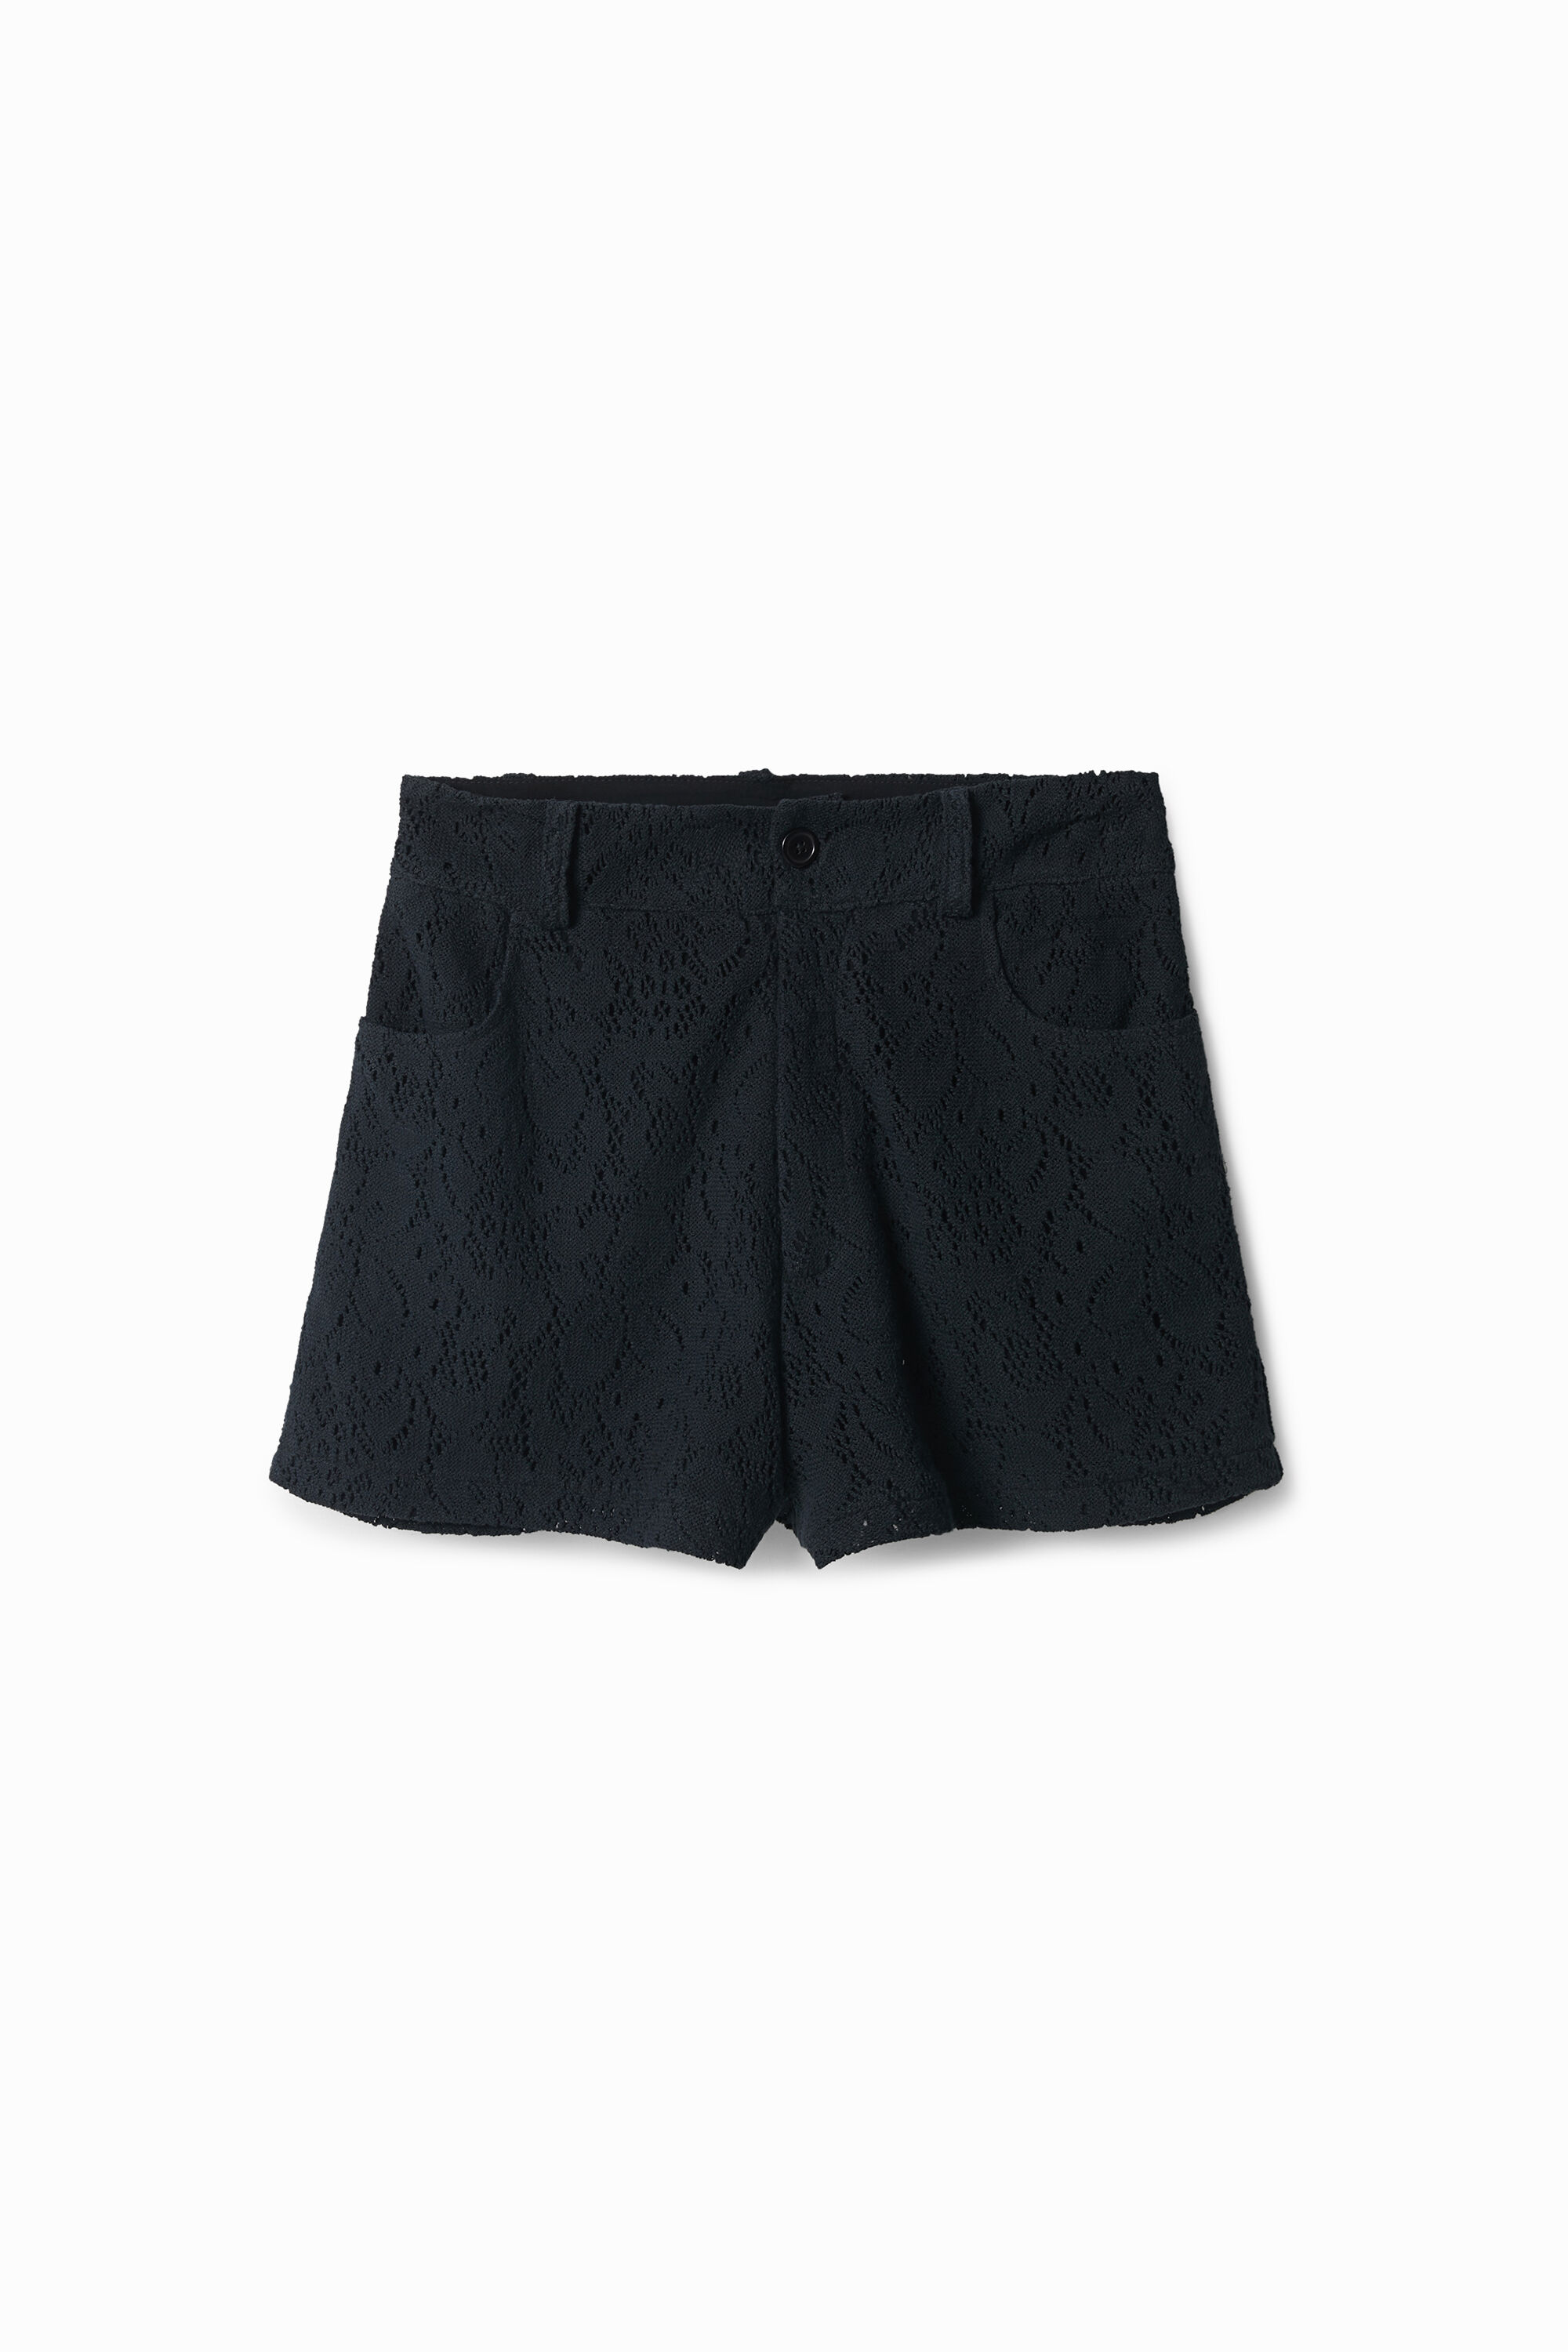 Chrochet shorts - BLACK - L